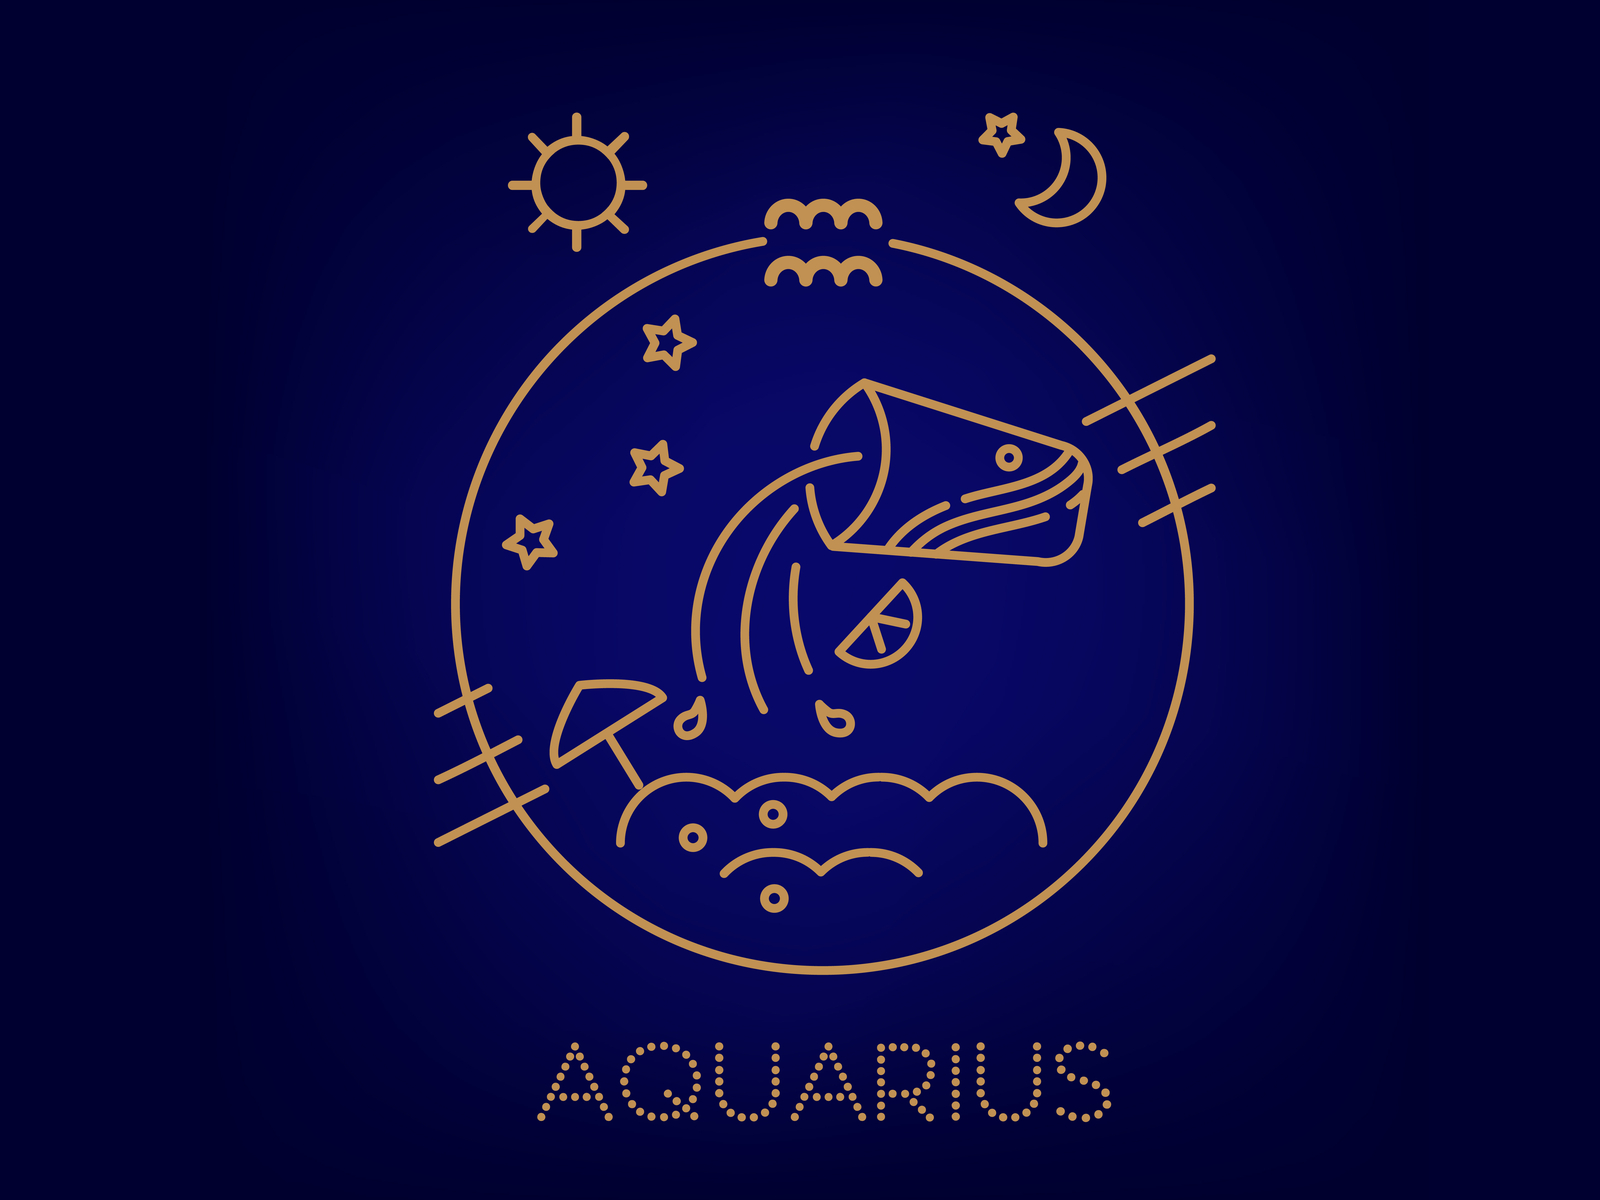 Aquarius zodiac sign, logo, tattoo or illustration. by Ok Sotnikova on ...